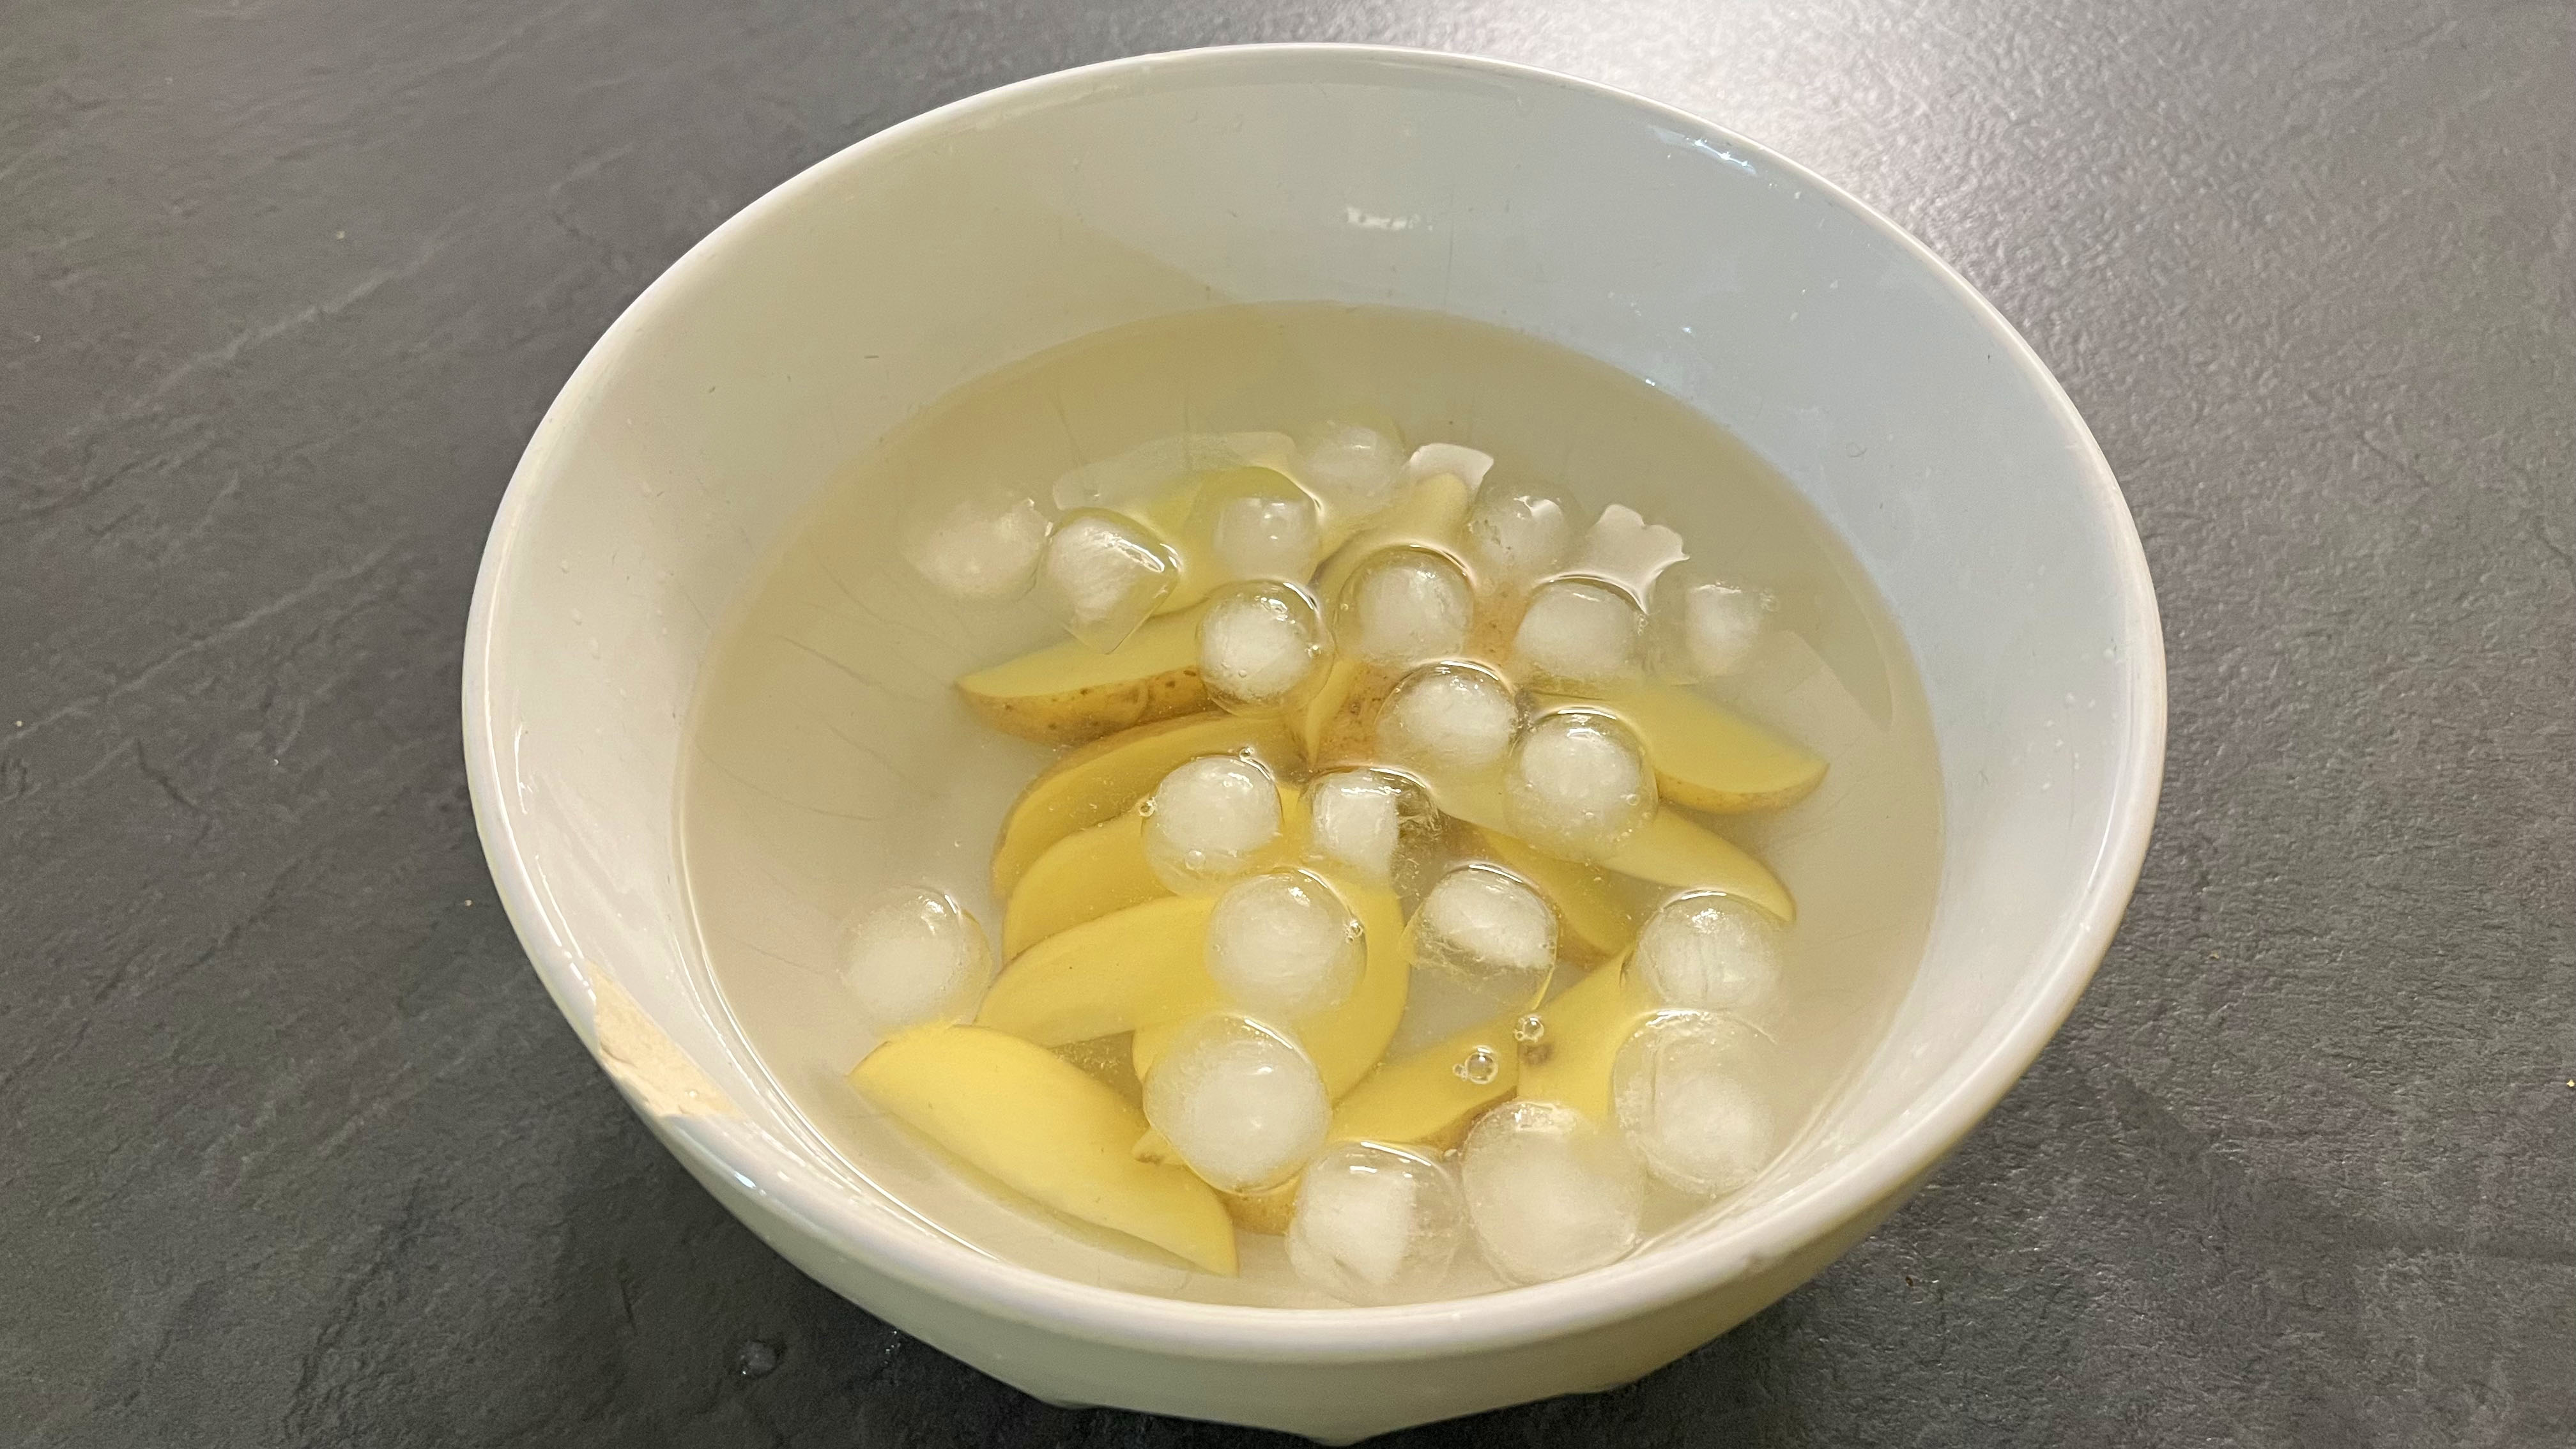 Wedge potatoes in an ice bath